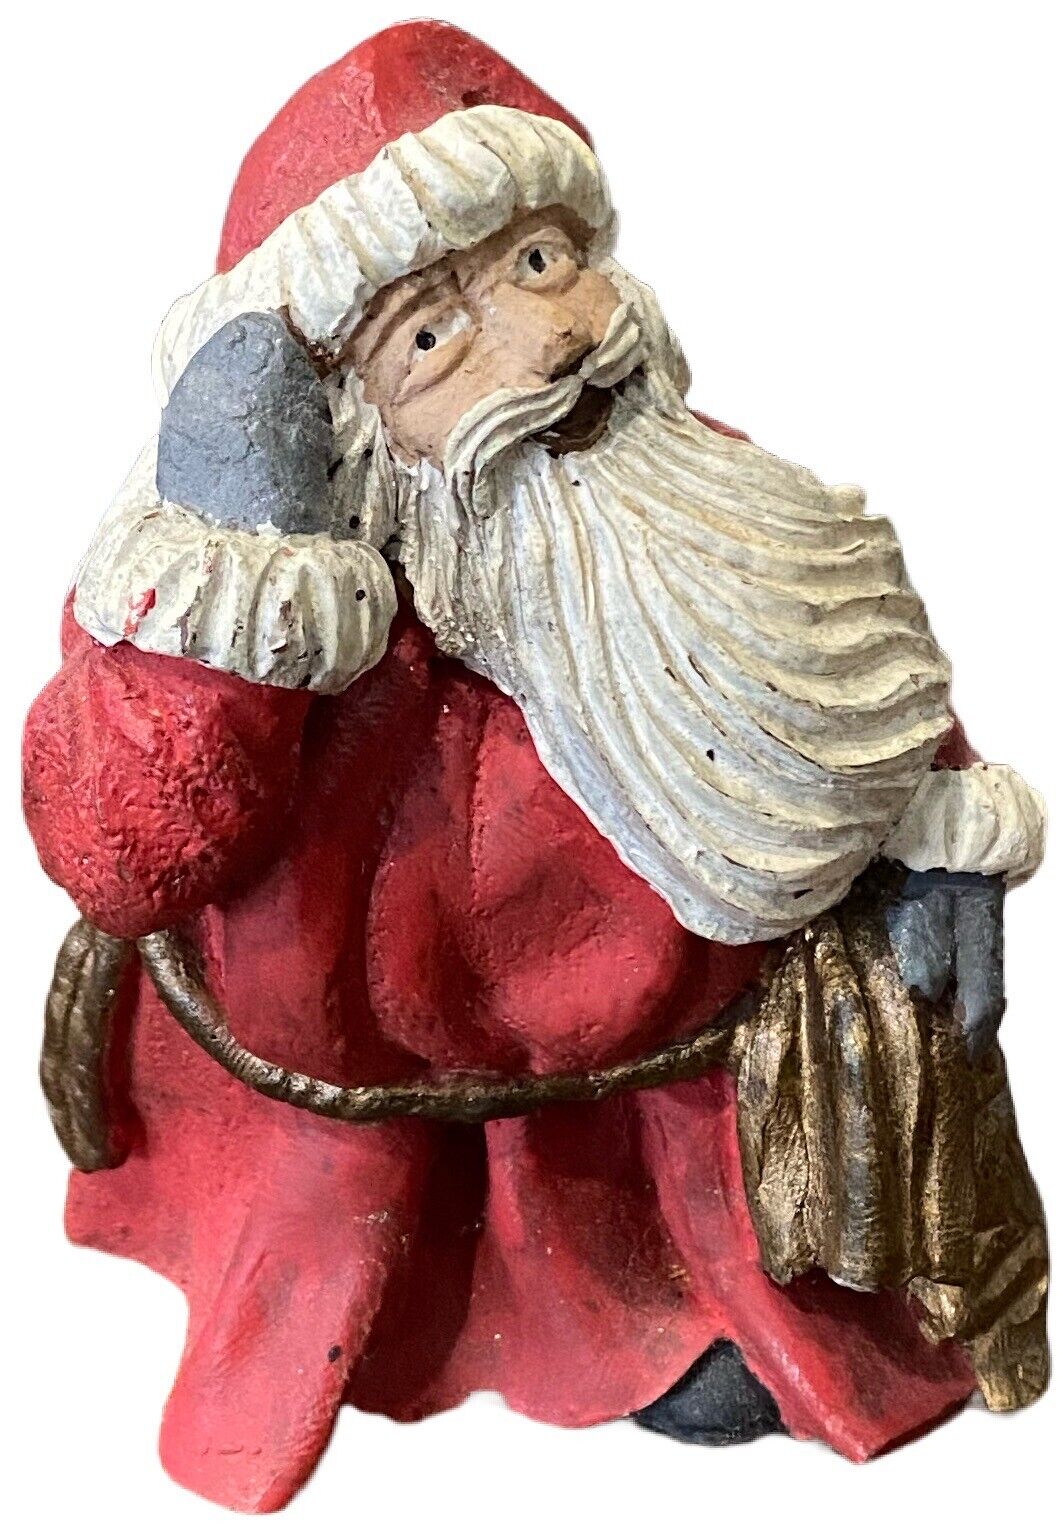 Vintage 4-in Wooden Hand Carved Santa Claus Figurine,  Handmade Christmas